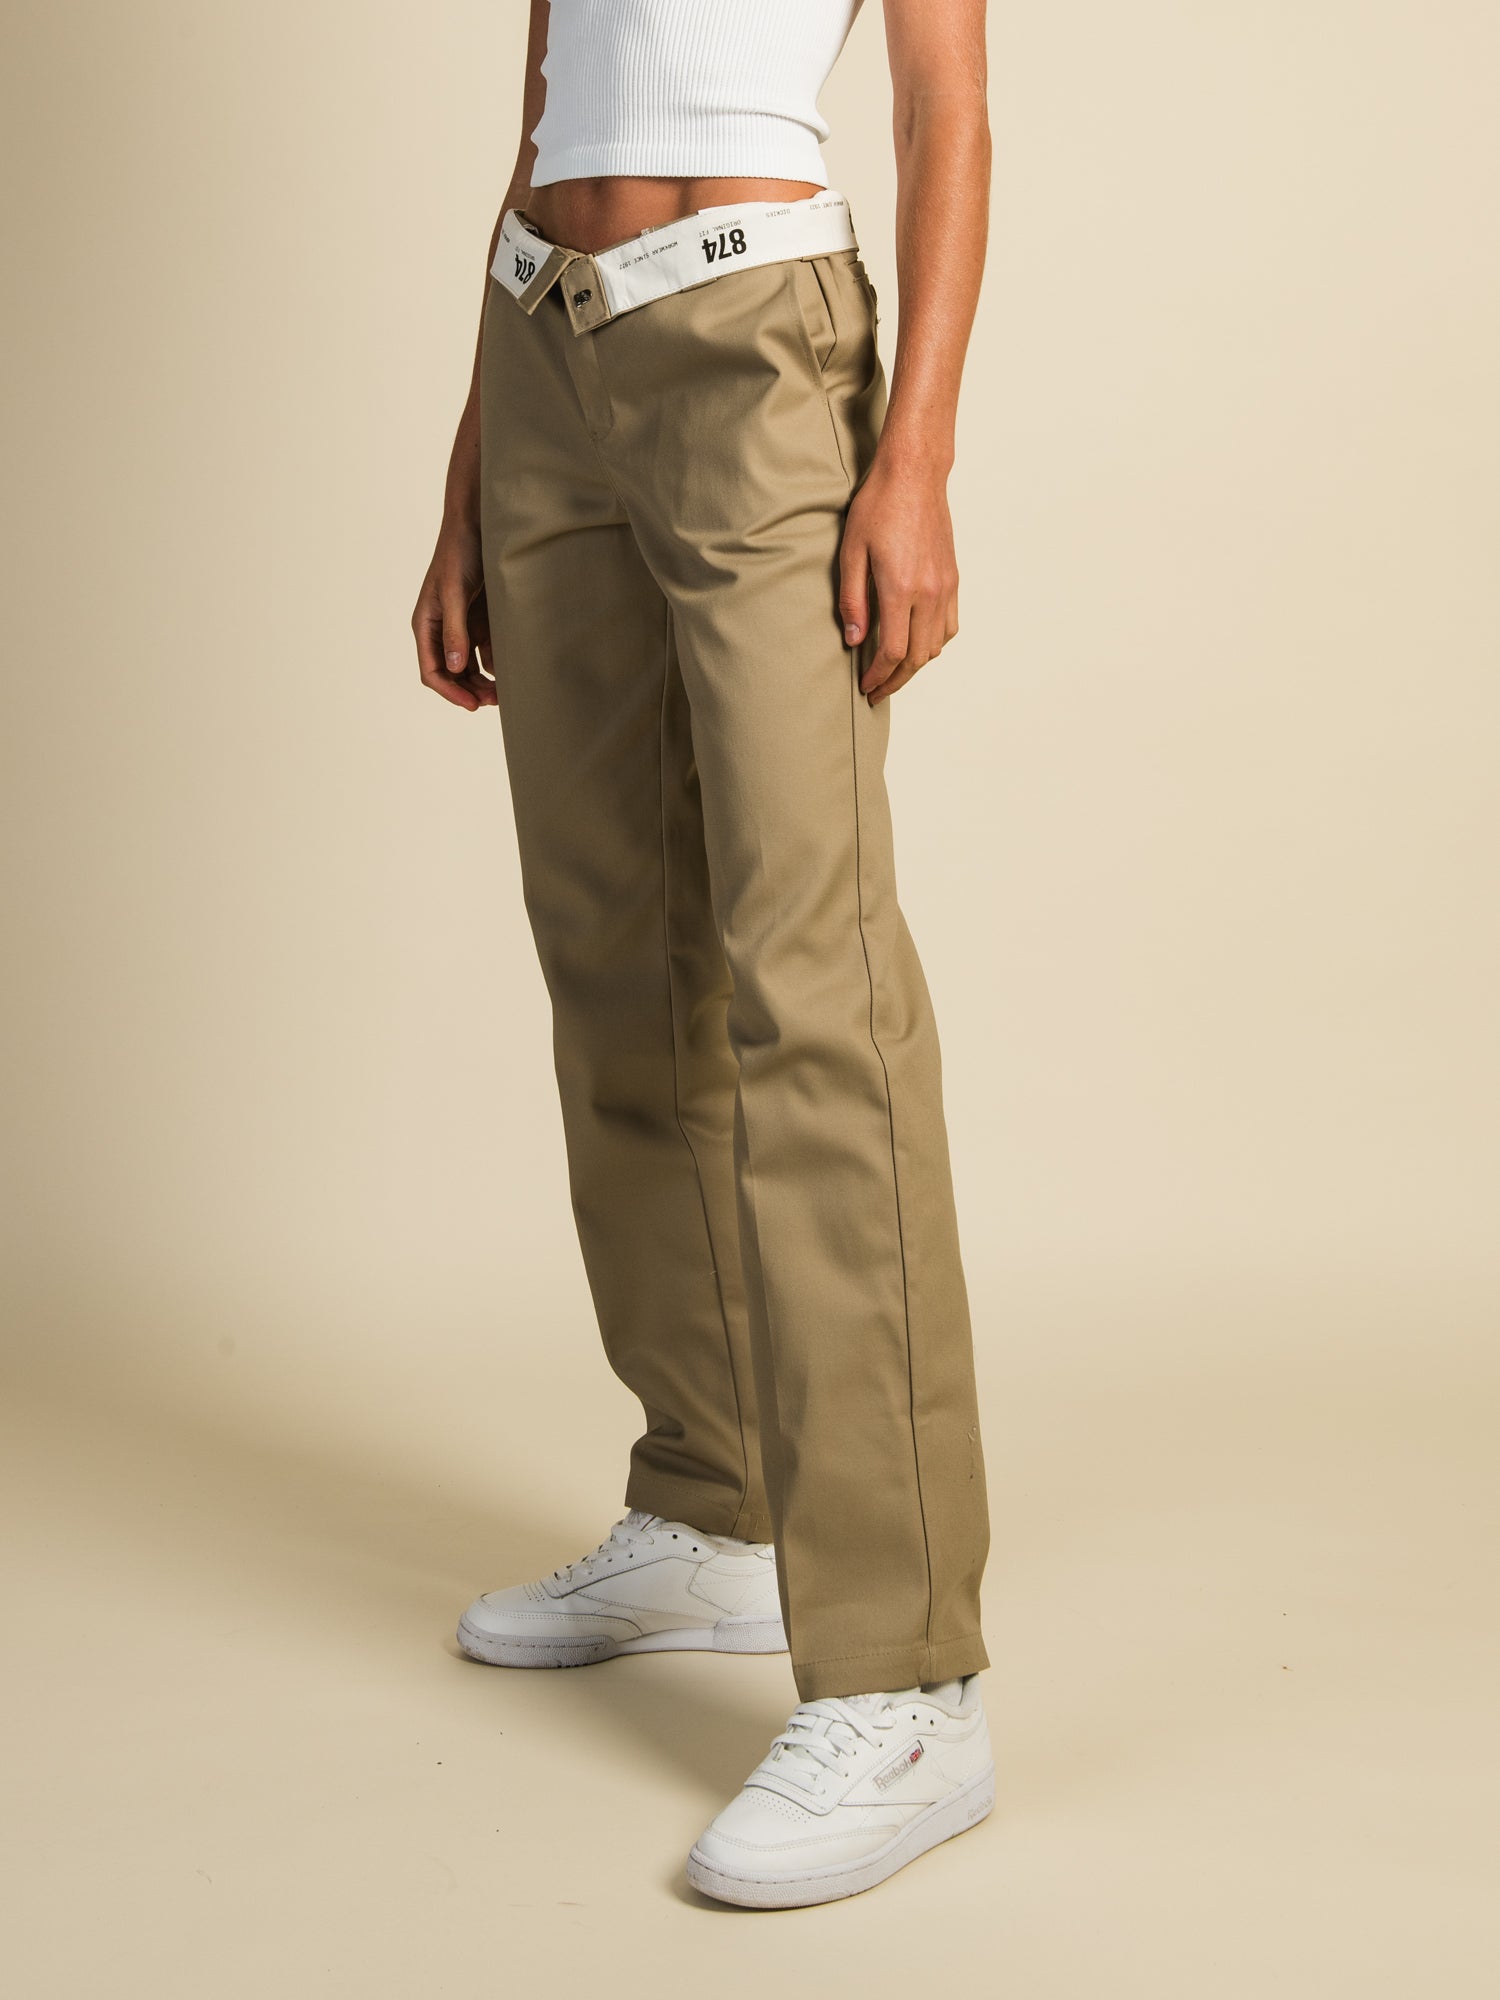 Dockers Beige Pleated Cotton Khakis Chinos Mens Pants 36 x 30 – ASA  College: Florida